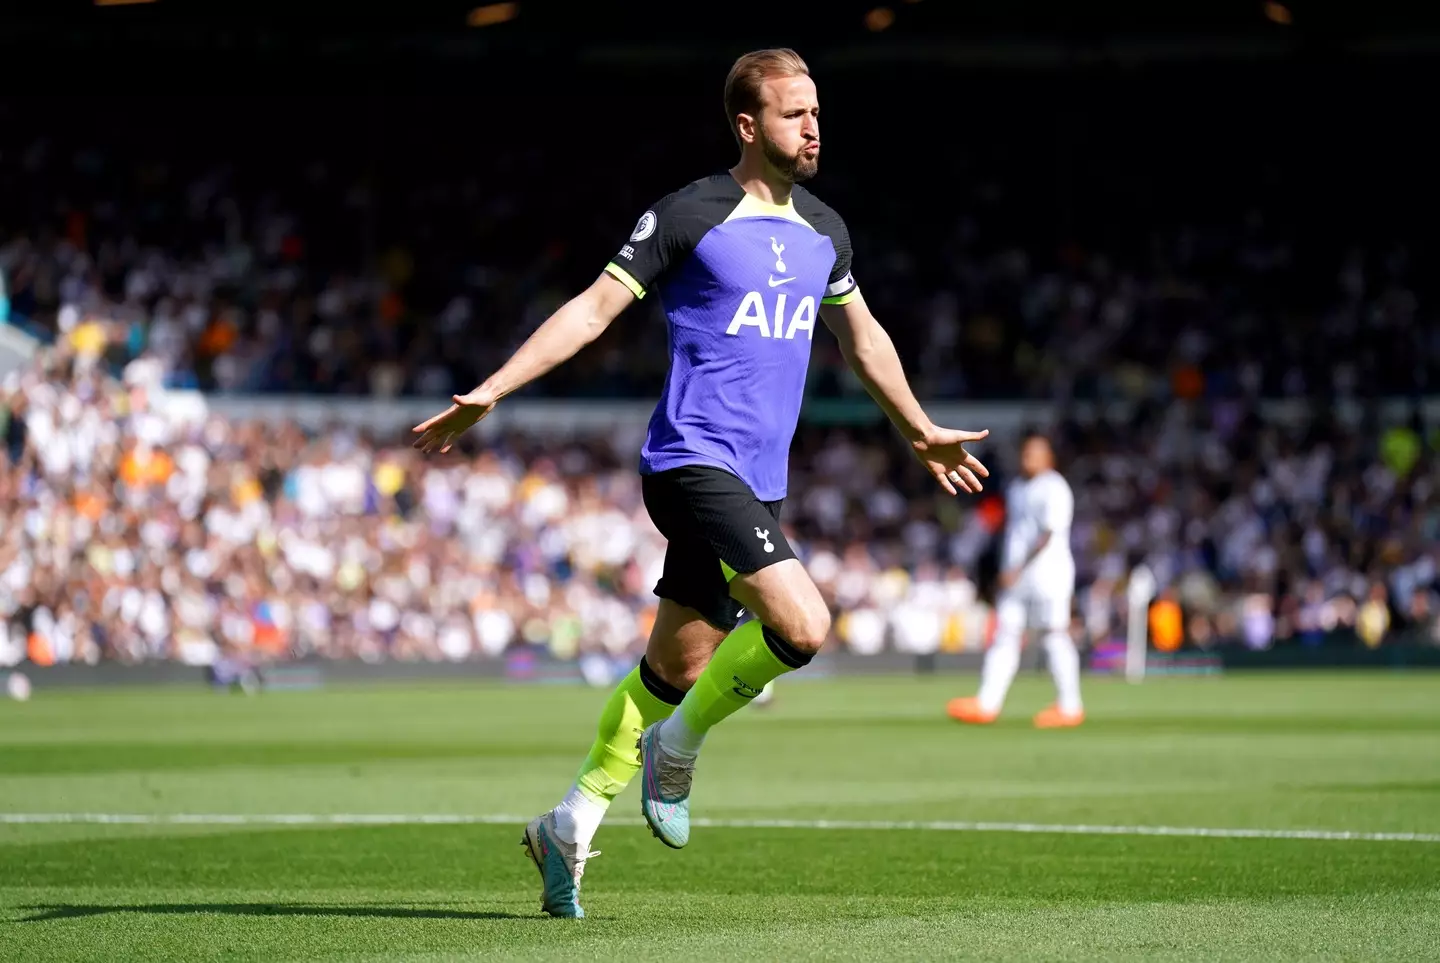 Harry Kane celebrates scoring a goal for Tottenham. (Image credit: Alamy)